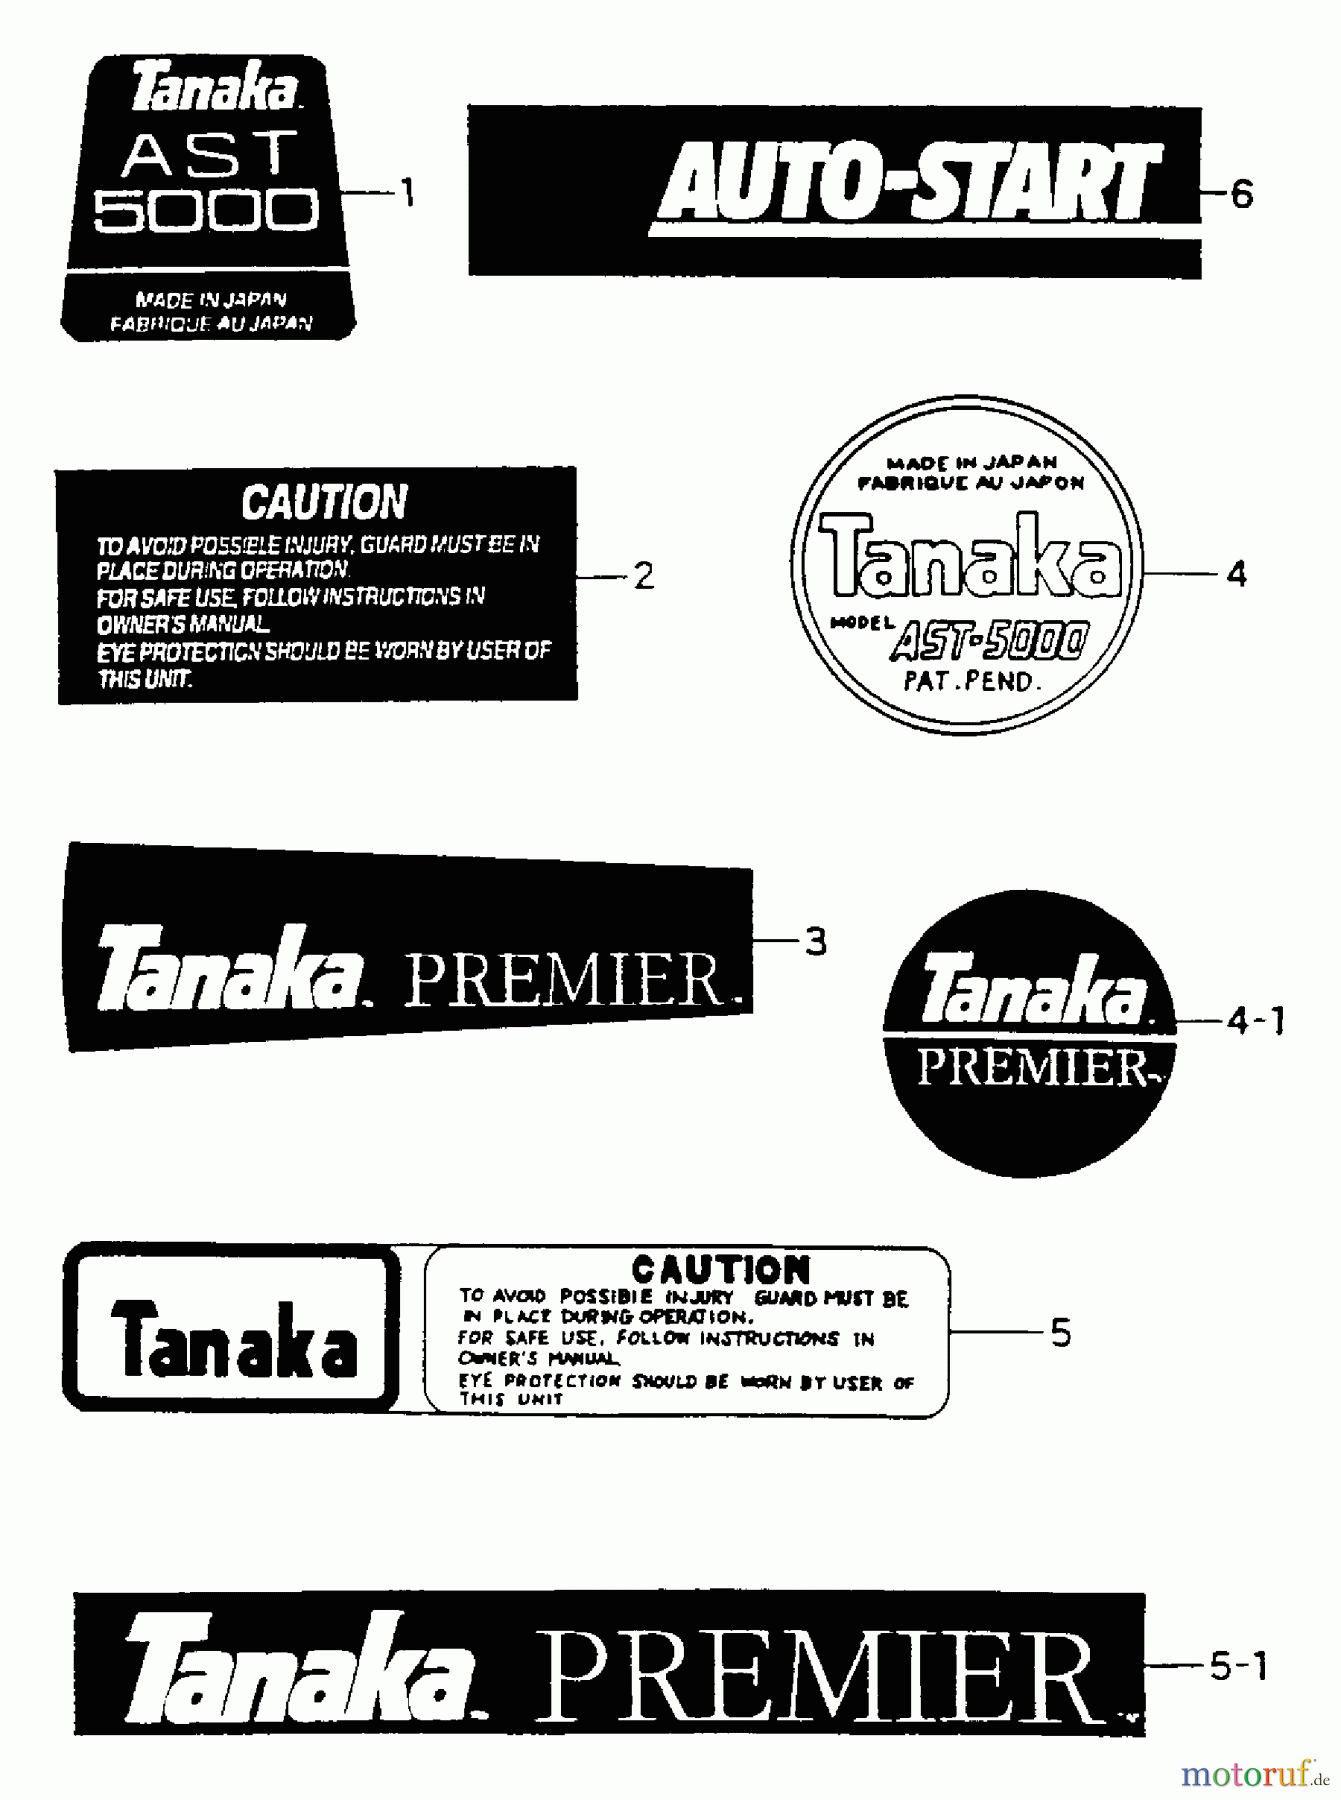  Tanaka Trimmer, Motorsensen AST-5000 - Tanaka AutoStart Trimmer Marks